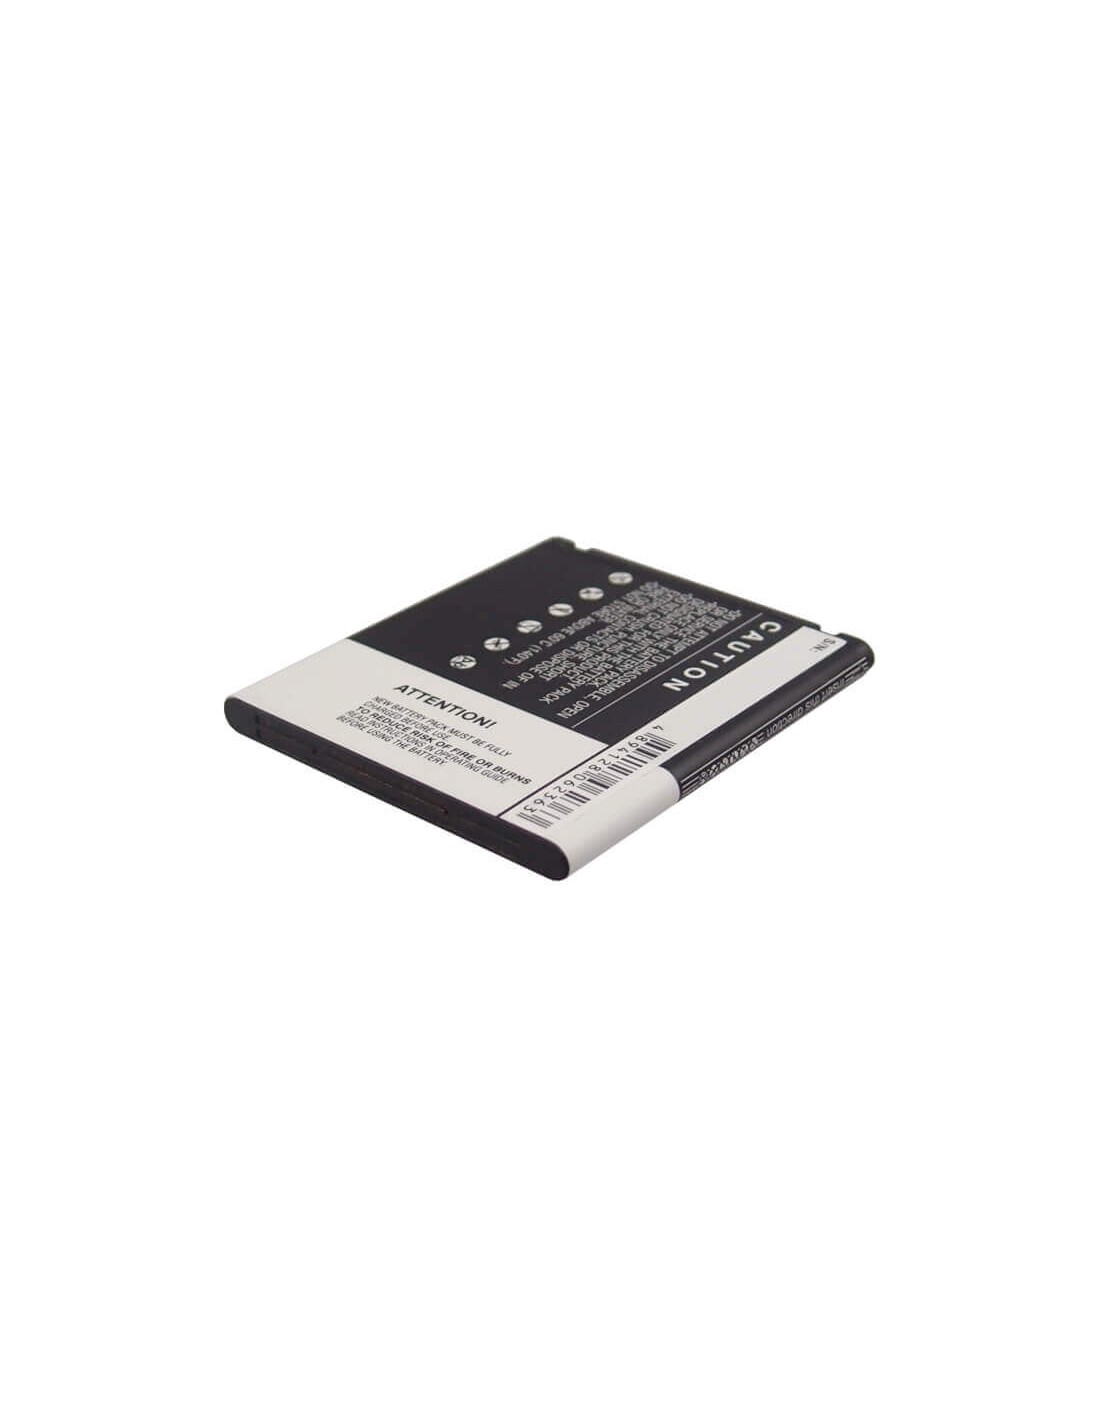 Battery for LG Optimus LTE, LU6200, SU640 3.7V, 1600mAh - 5.92Wh